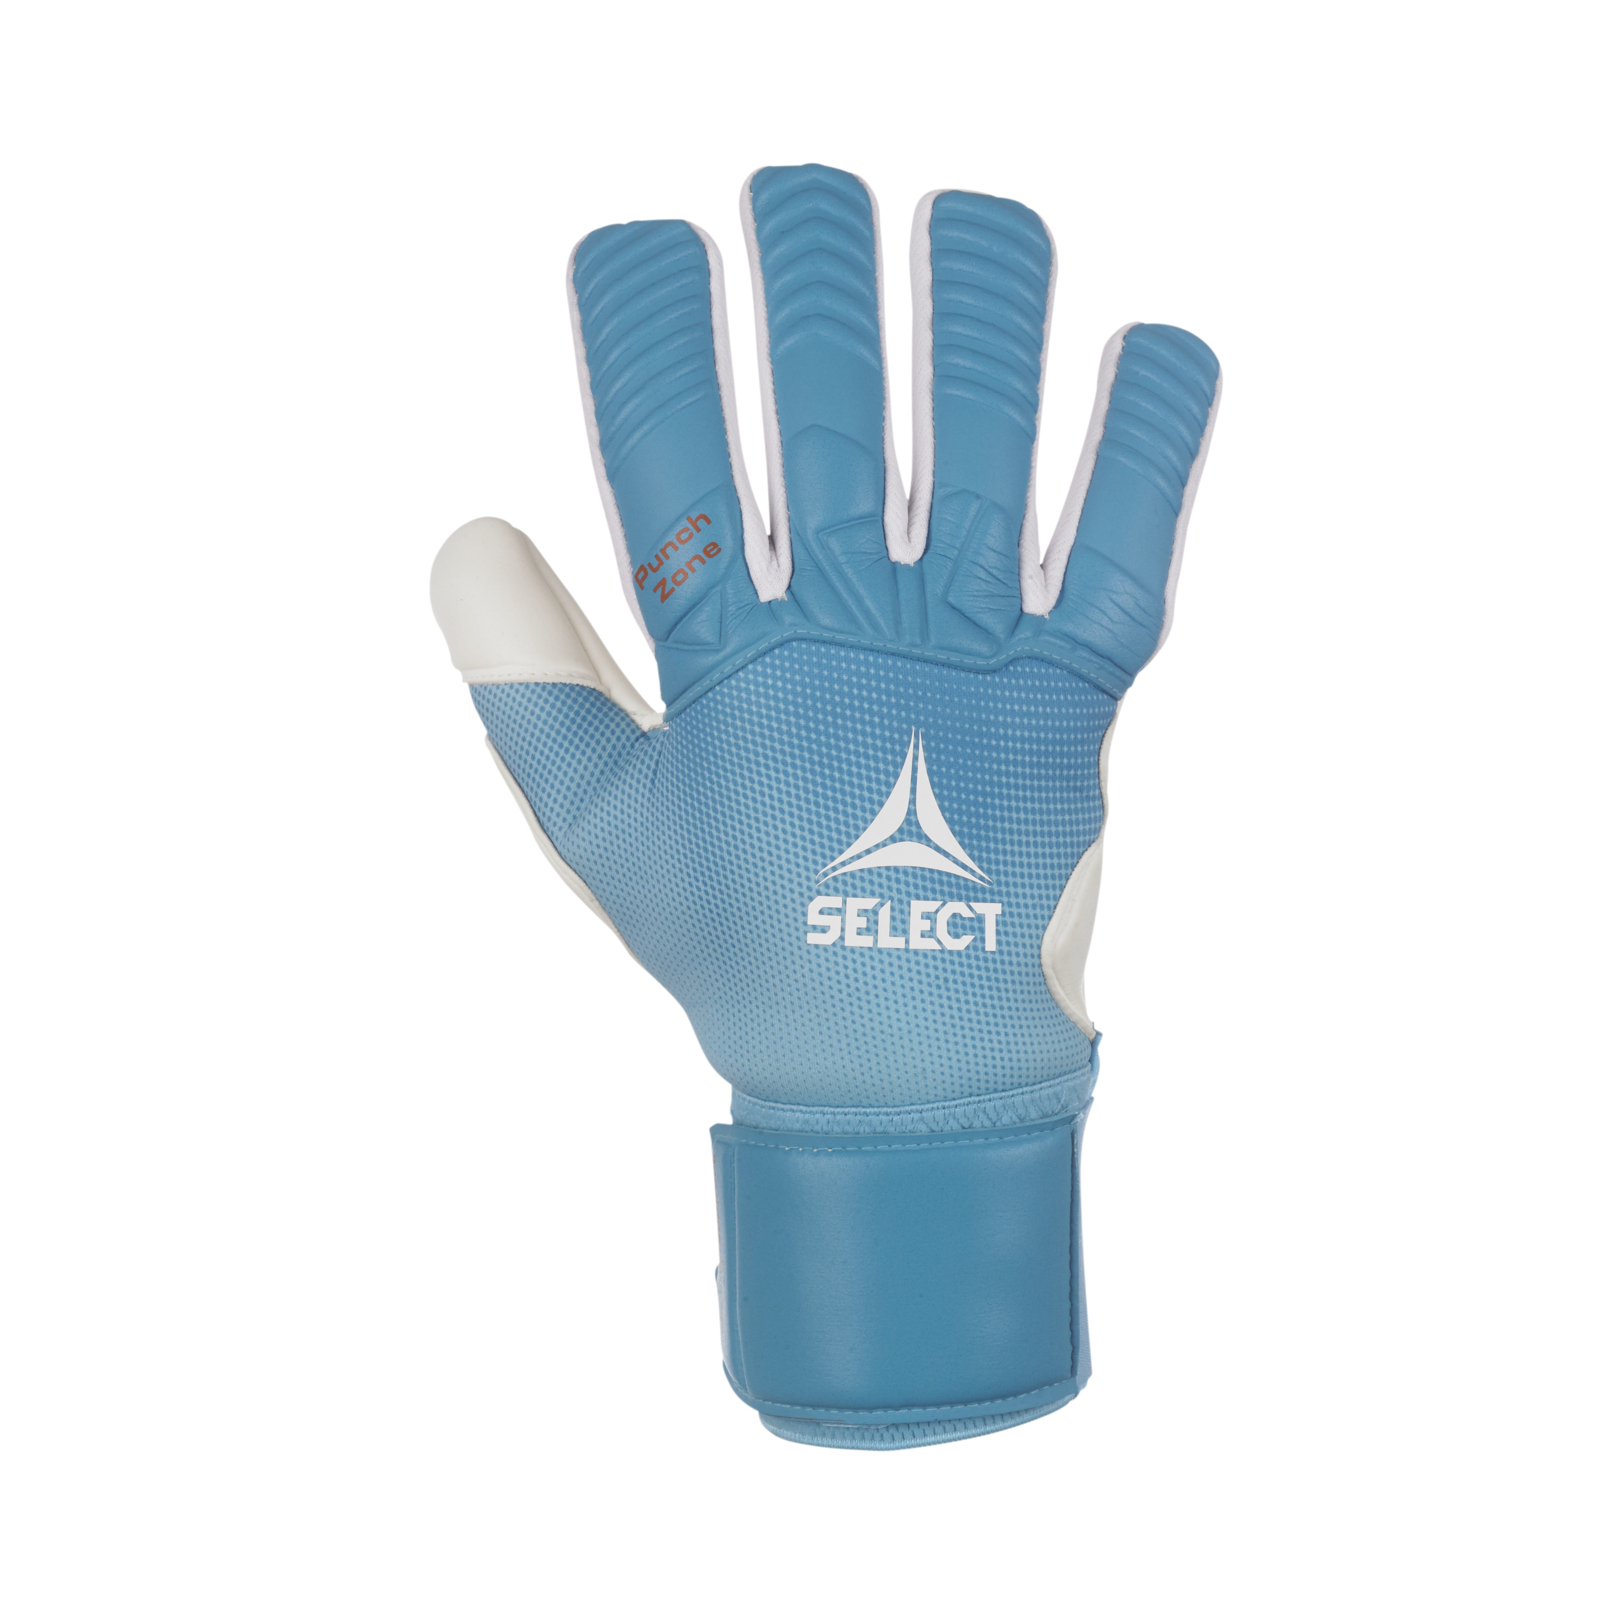 Вратарские перчатки Select Goalkeeper Gloves 33 601331-410 Allround синій, білий Уні 8,5 (5703543316458) изображение 3